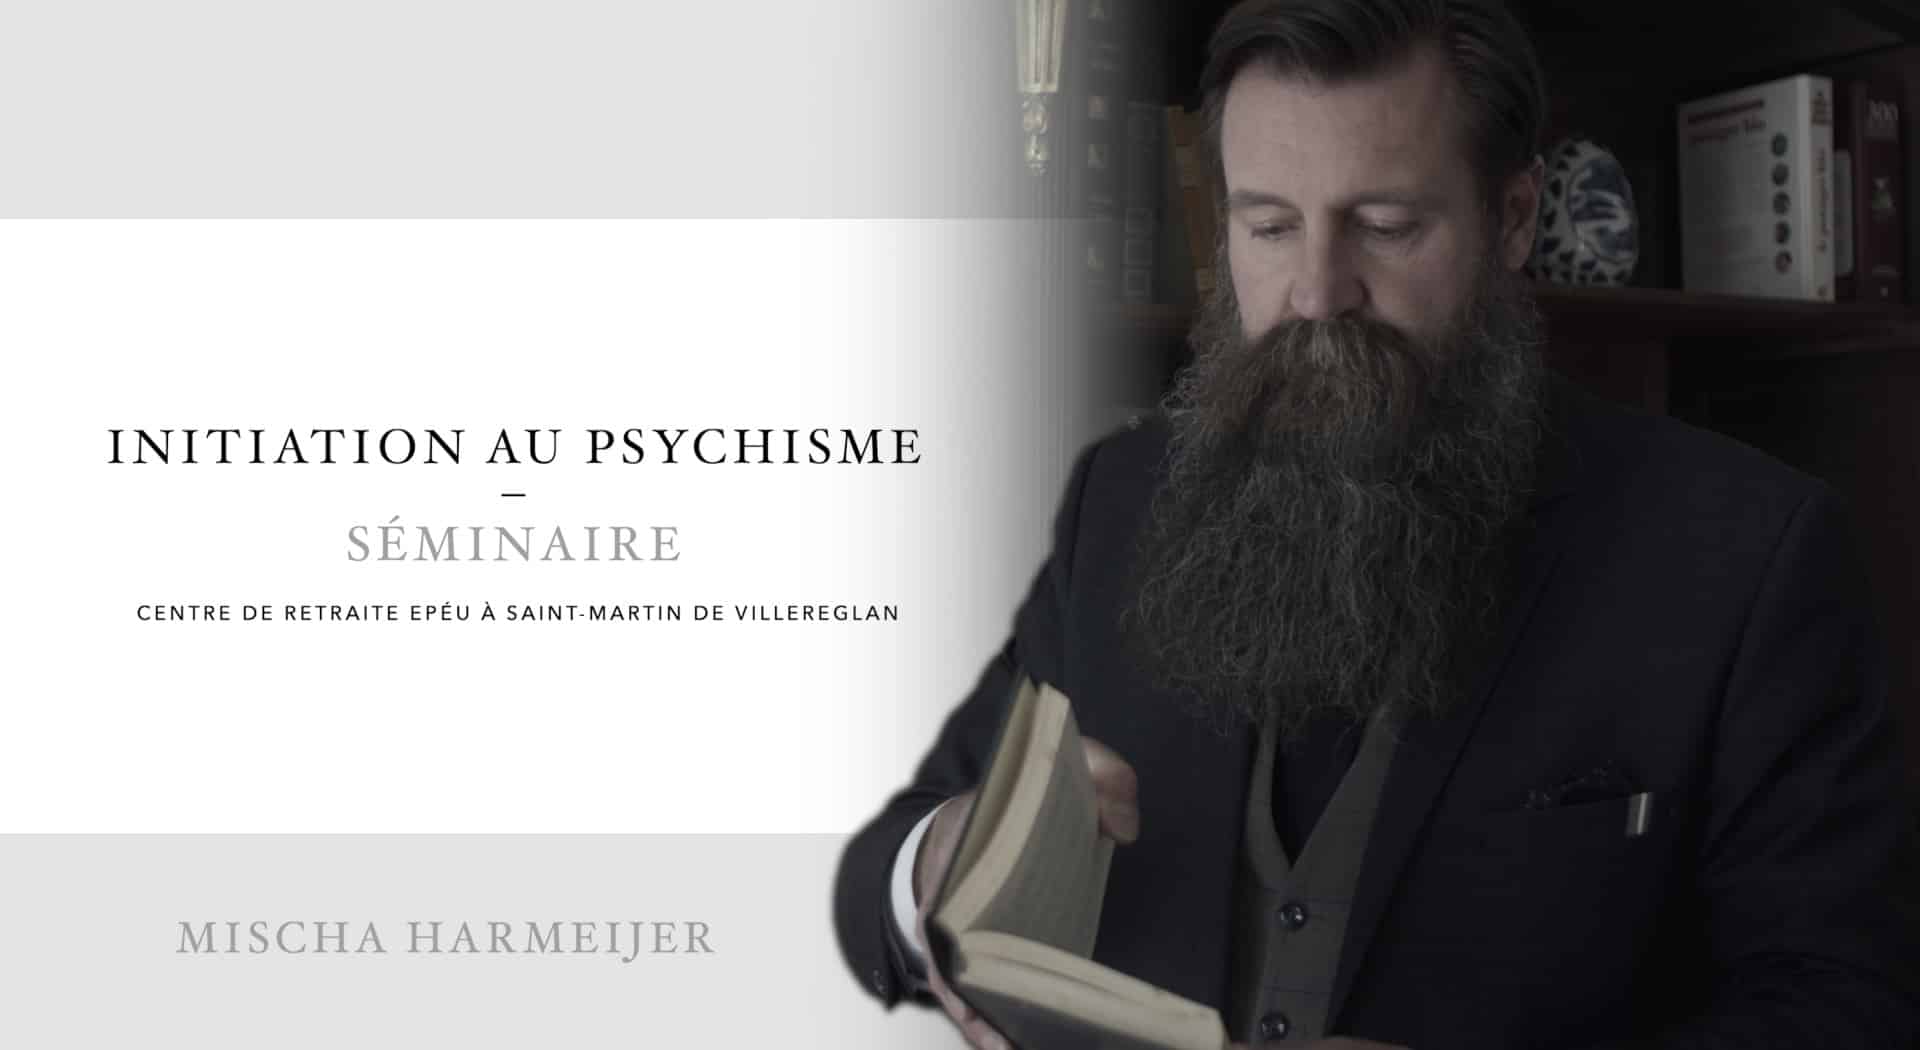 Seminar Introduction to the psyche of Mischa Harmeijer